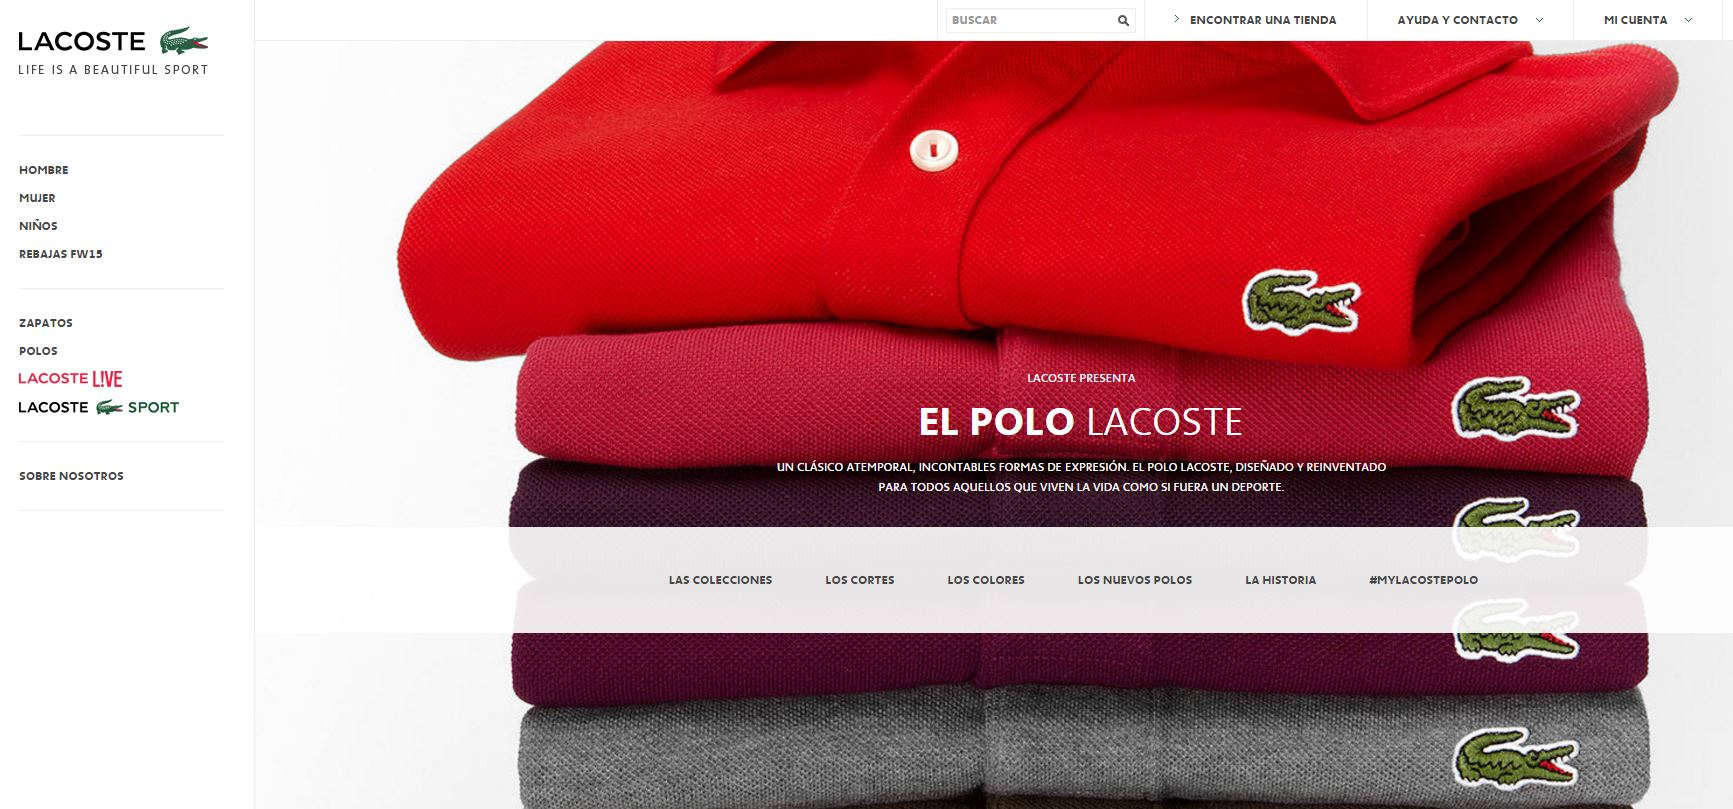 Lacoste abre tienda España - Blog Trilogi | The eCommerce Agency